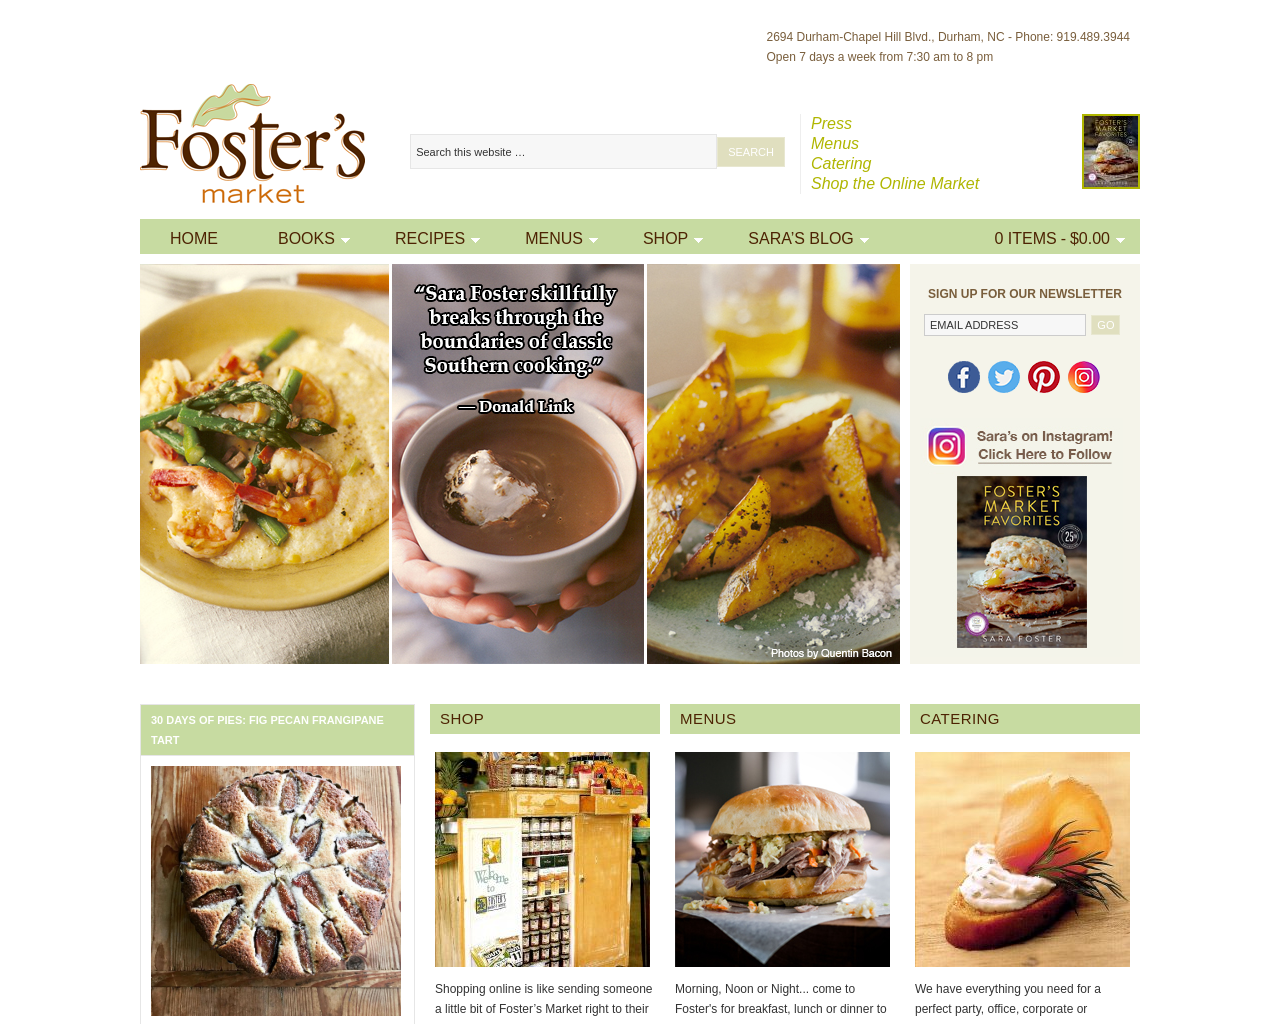 fostersmarket.com